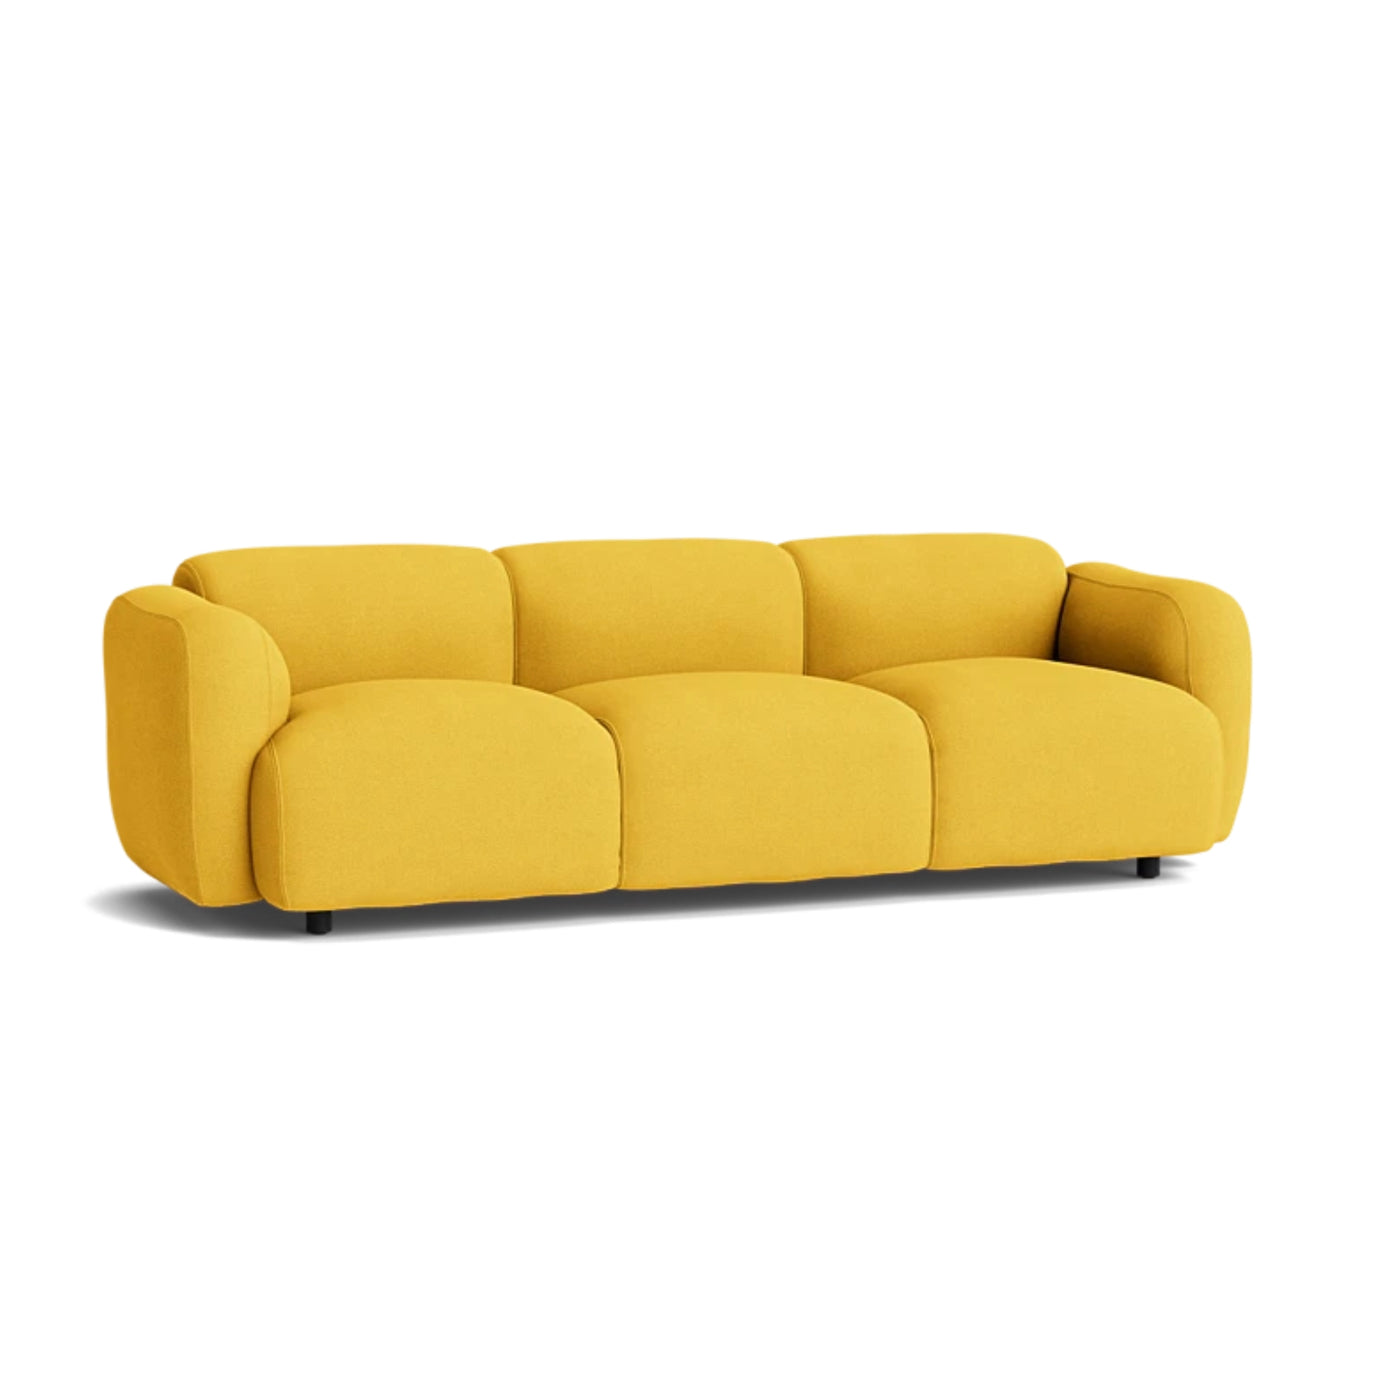 Normann Copenhagen Swell 3 Seater Sofa at someday designs. #colour_hallingdal-457